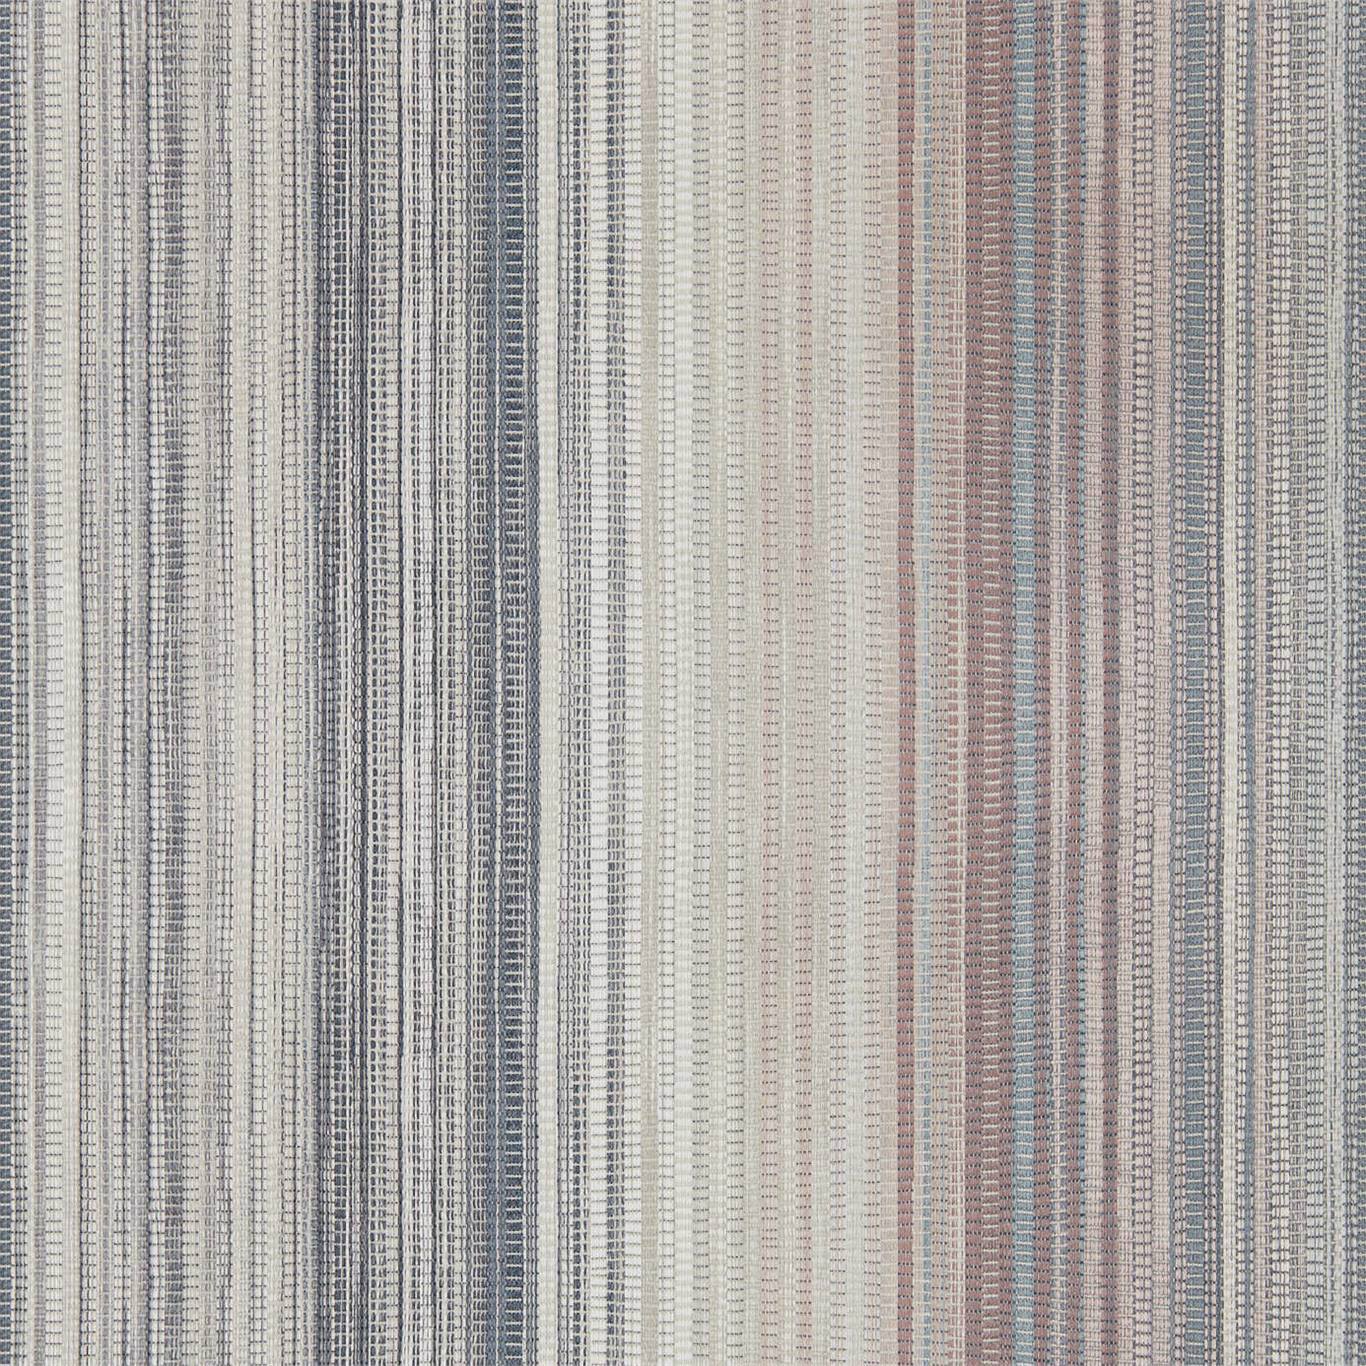 Spectro Stripe Steel/Blush Wallpaper HMWF111964 by Harlequin